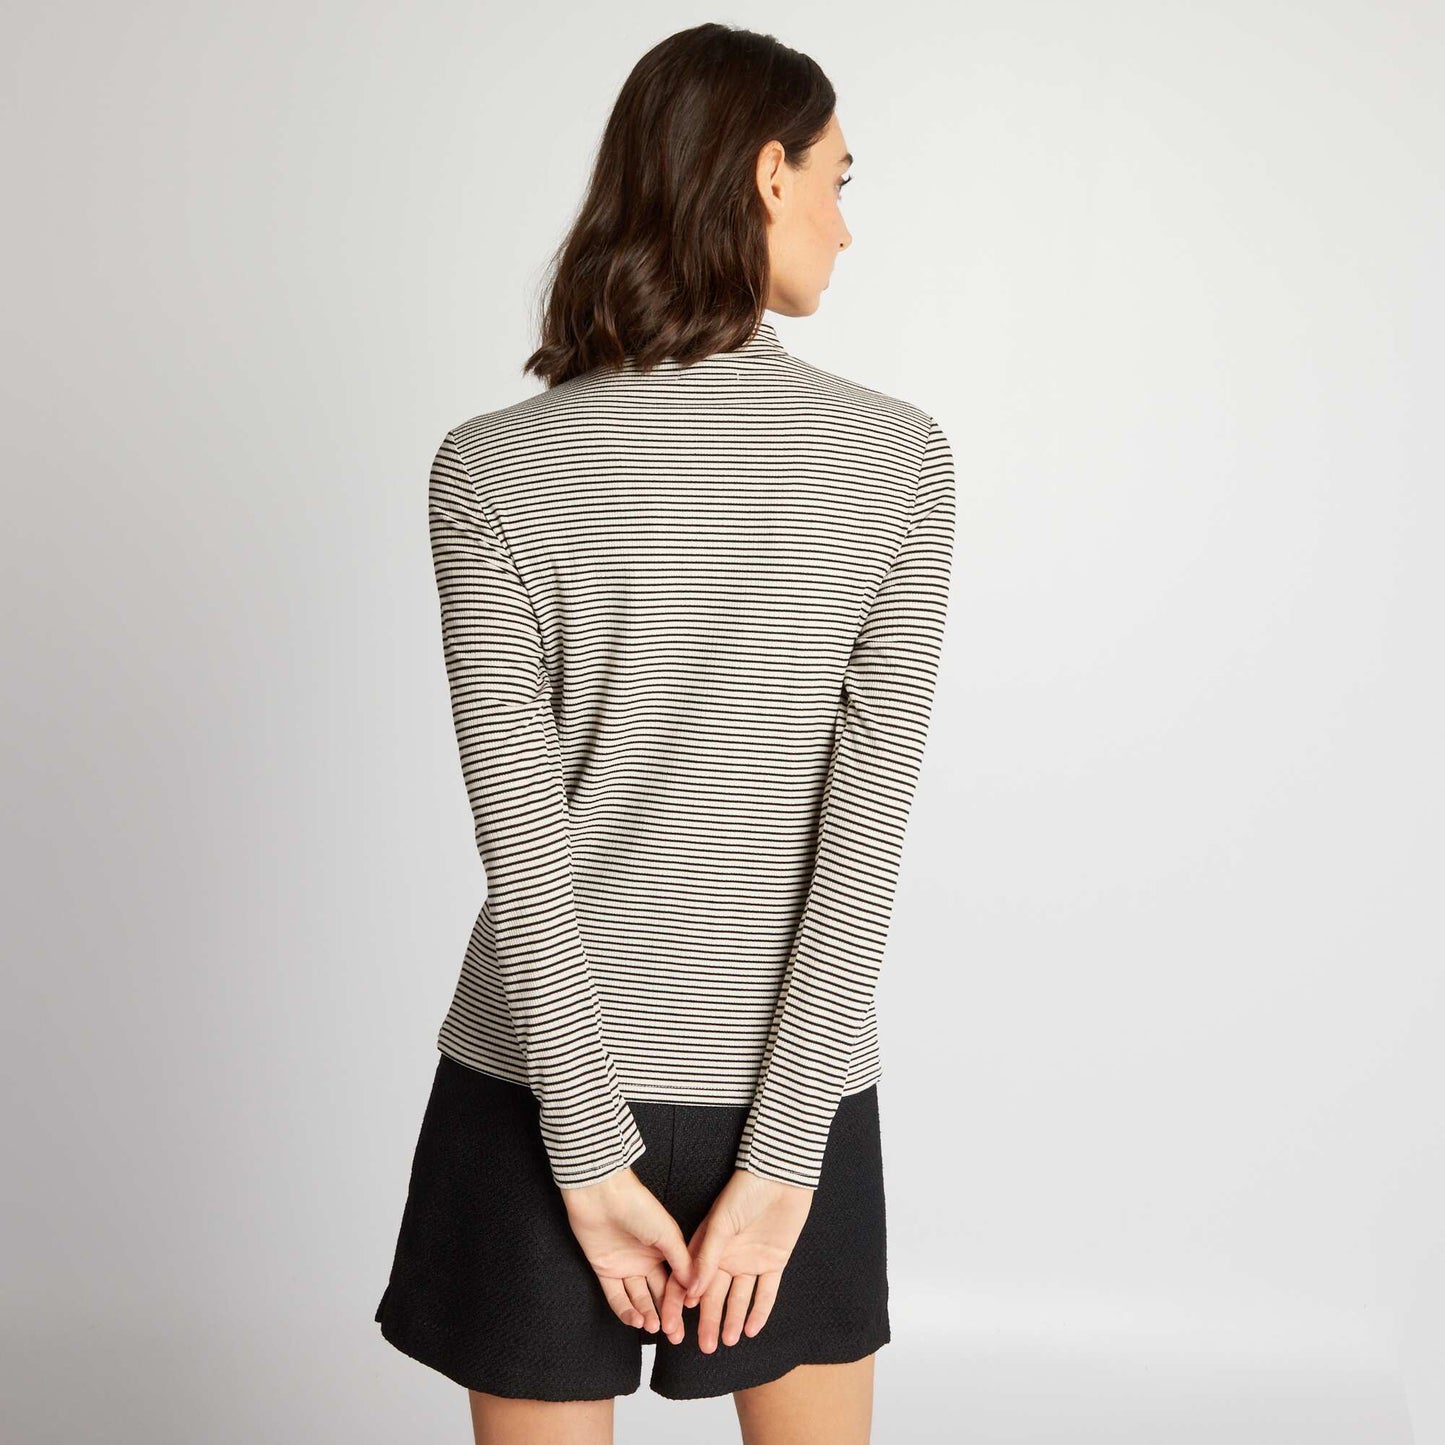 Ribbed knit undersweater BEIGE